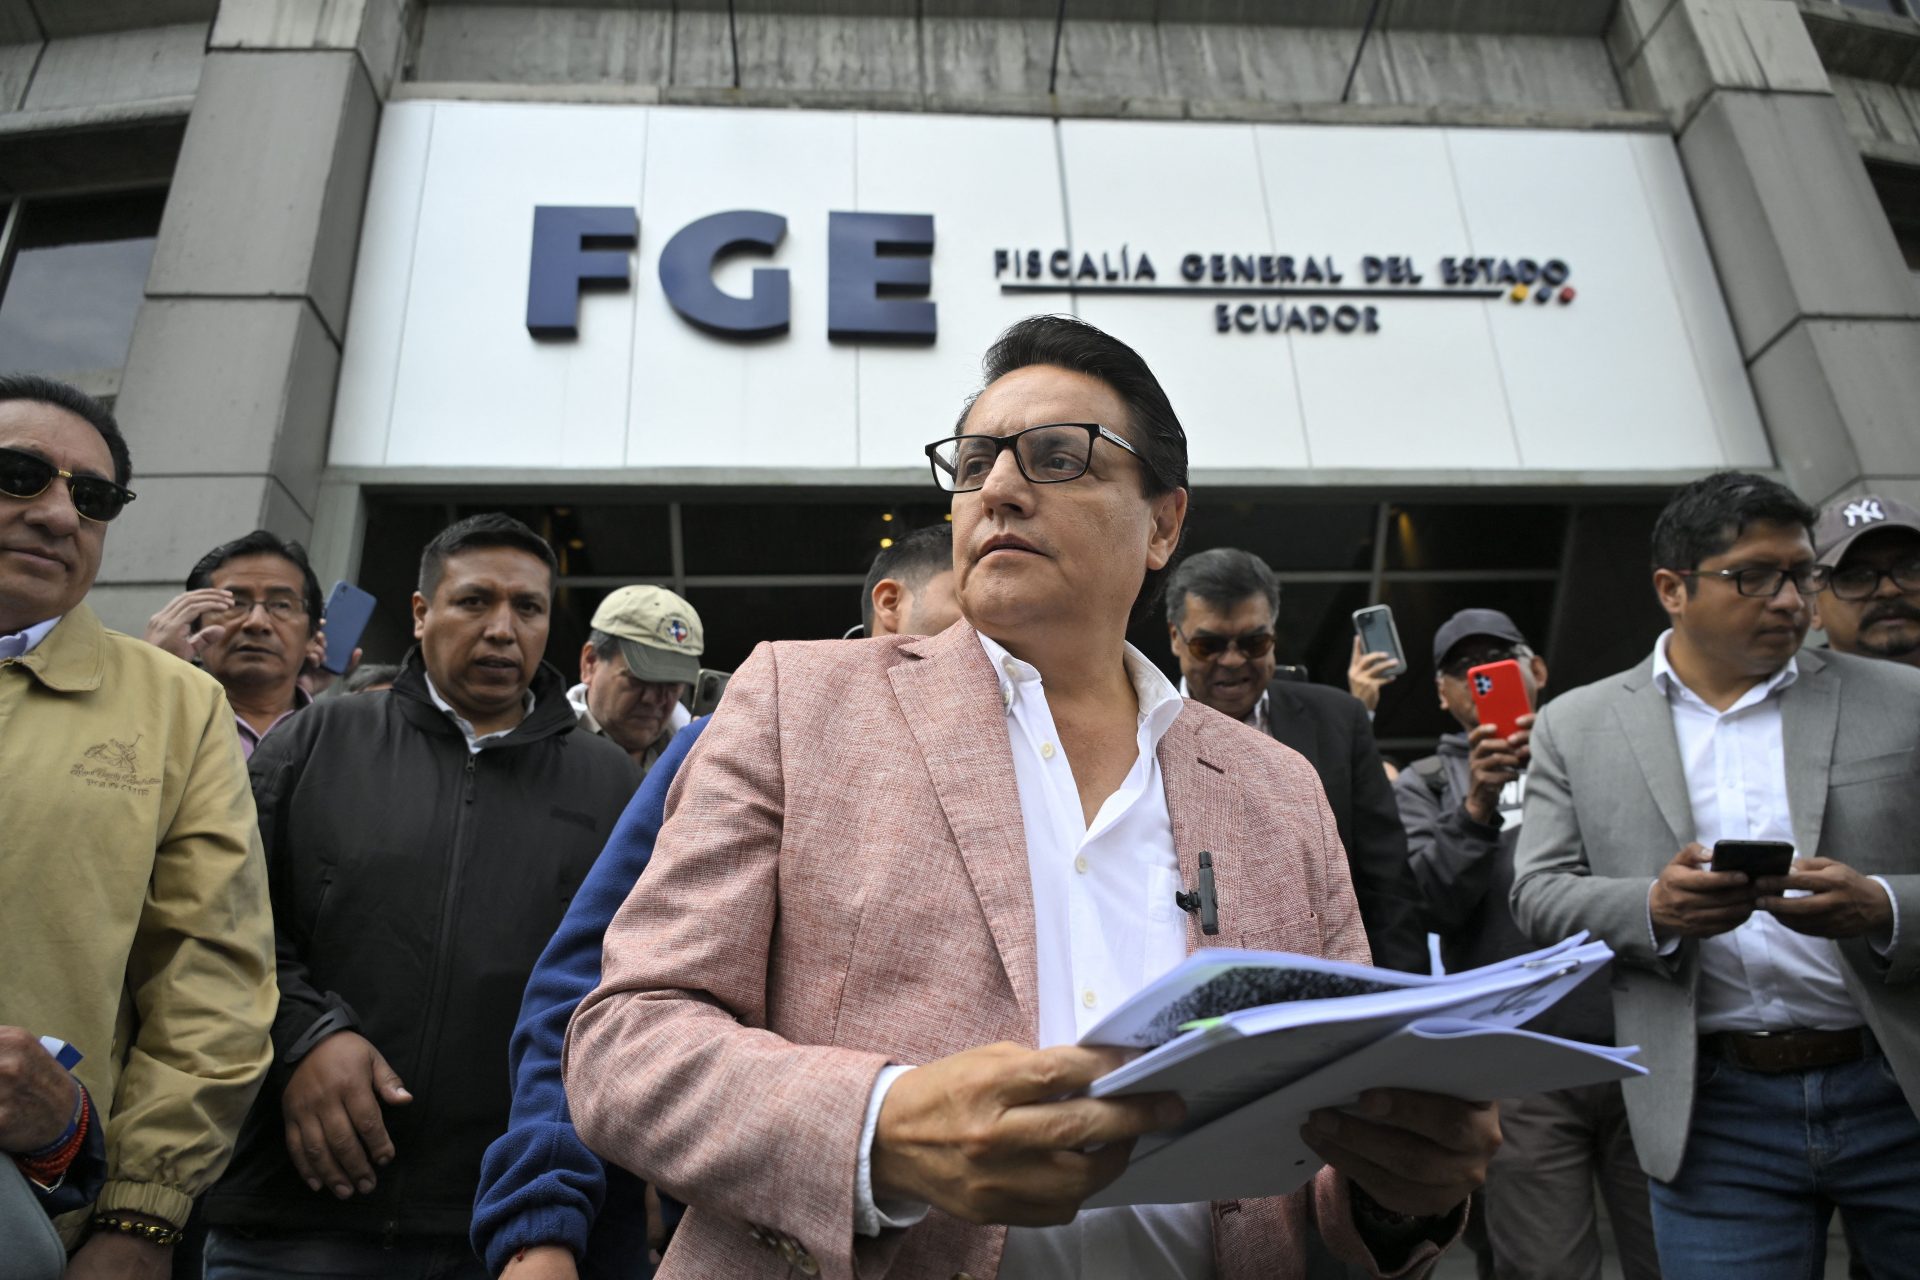 ¿Por qué mataron al candidato presidencial en Ecuador?